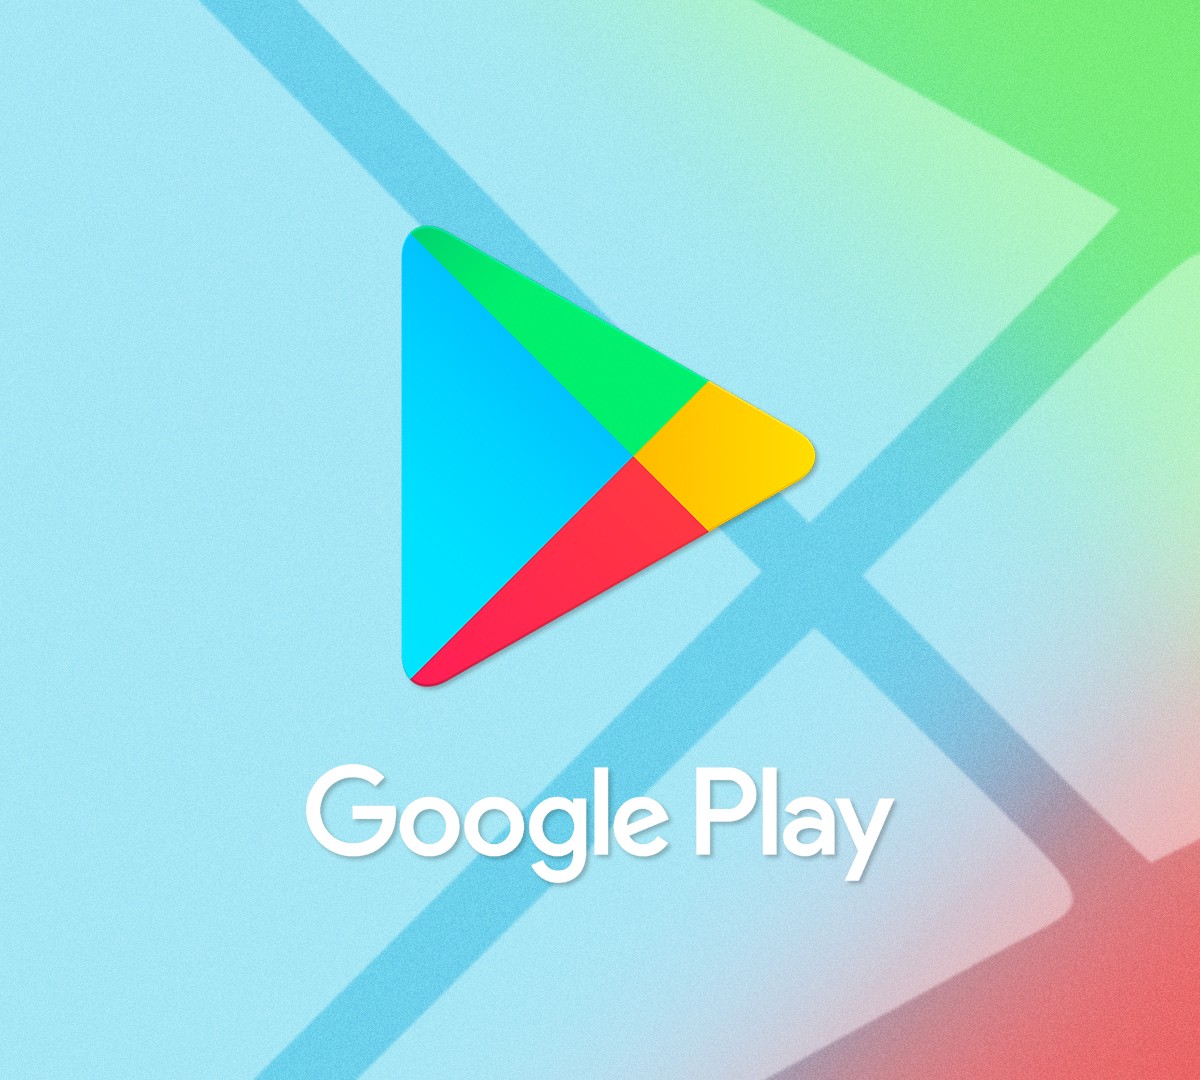 Google lança tonalidade azul para loja Play Store em 2023